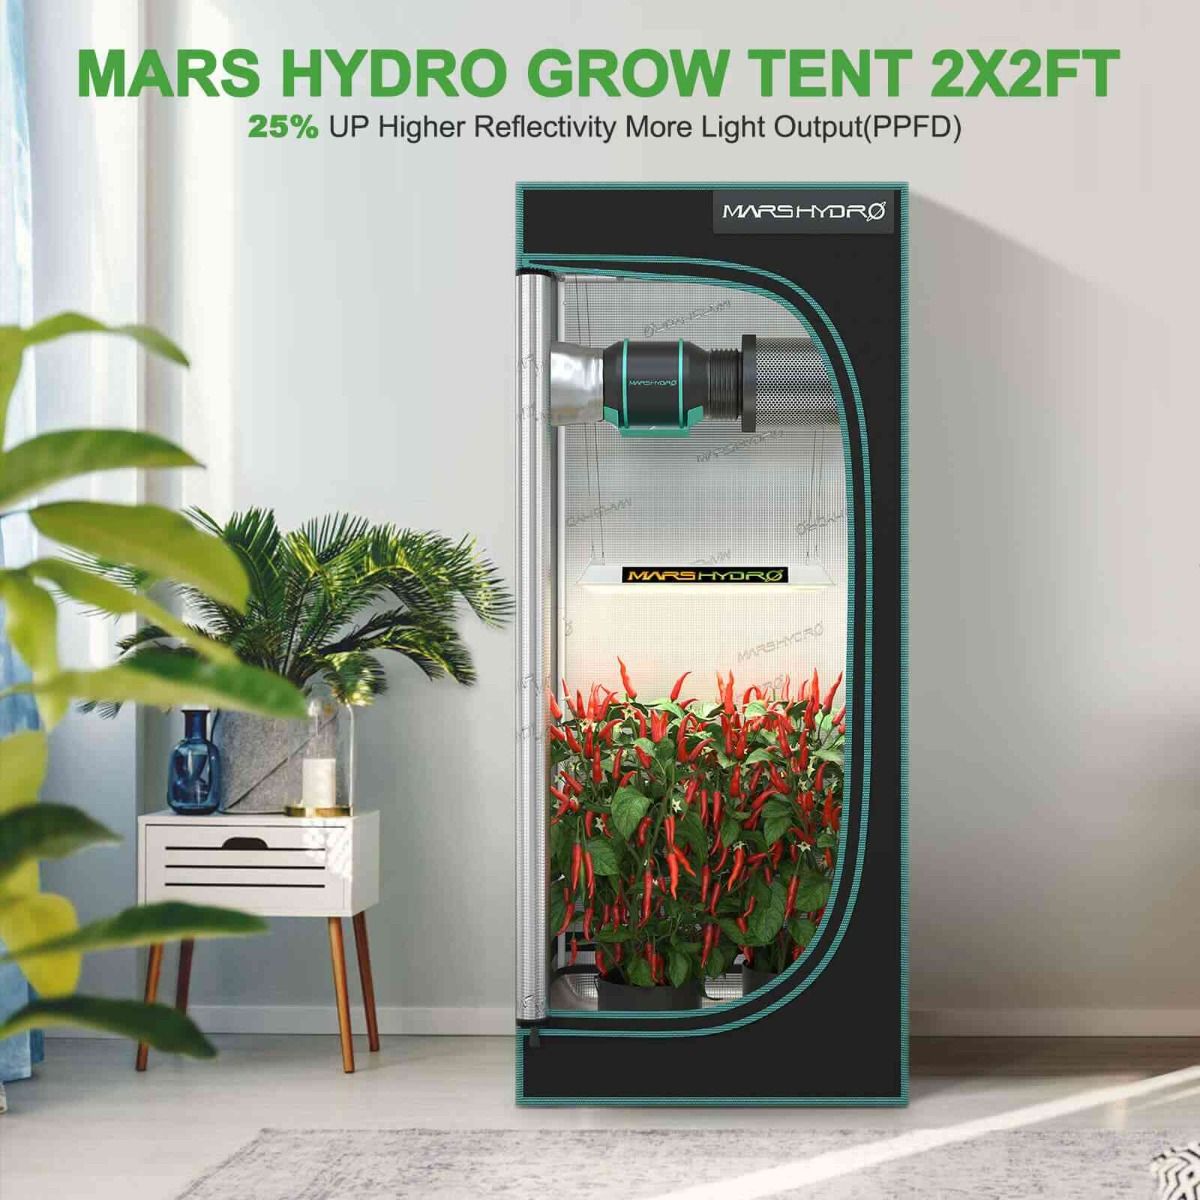 Mars Hydro TS LED Grow Lights